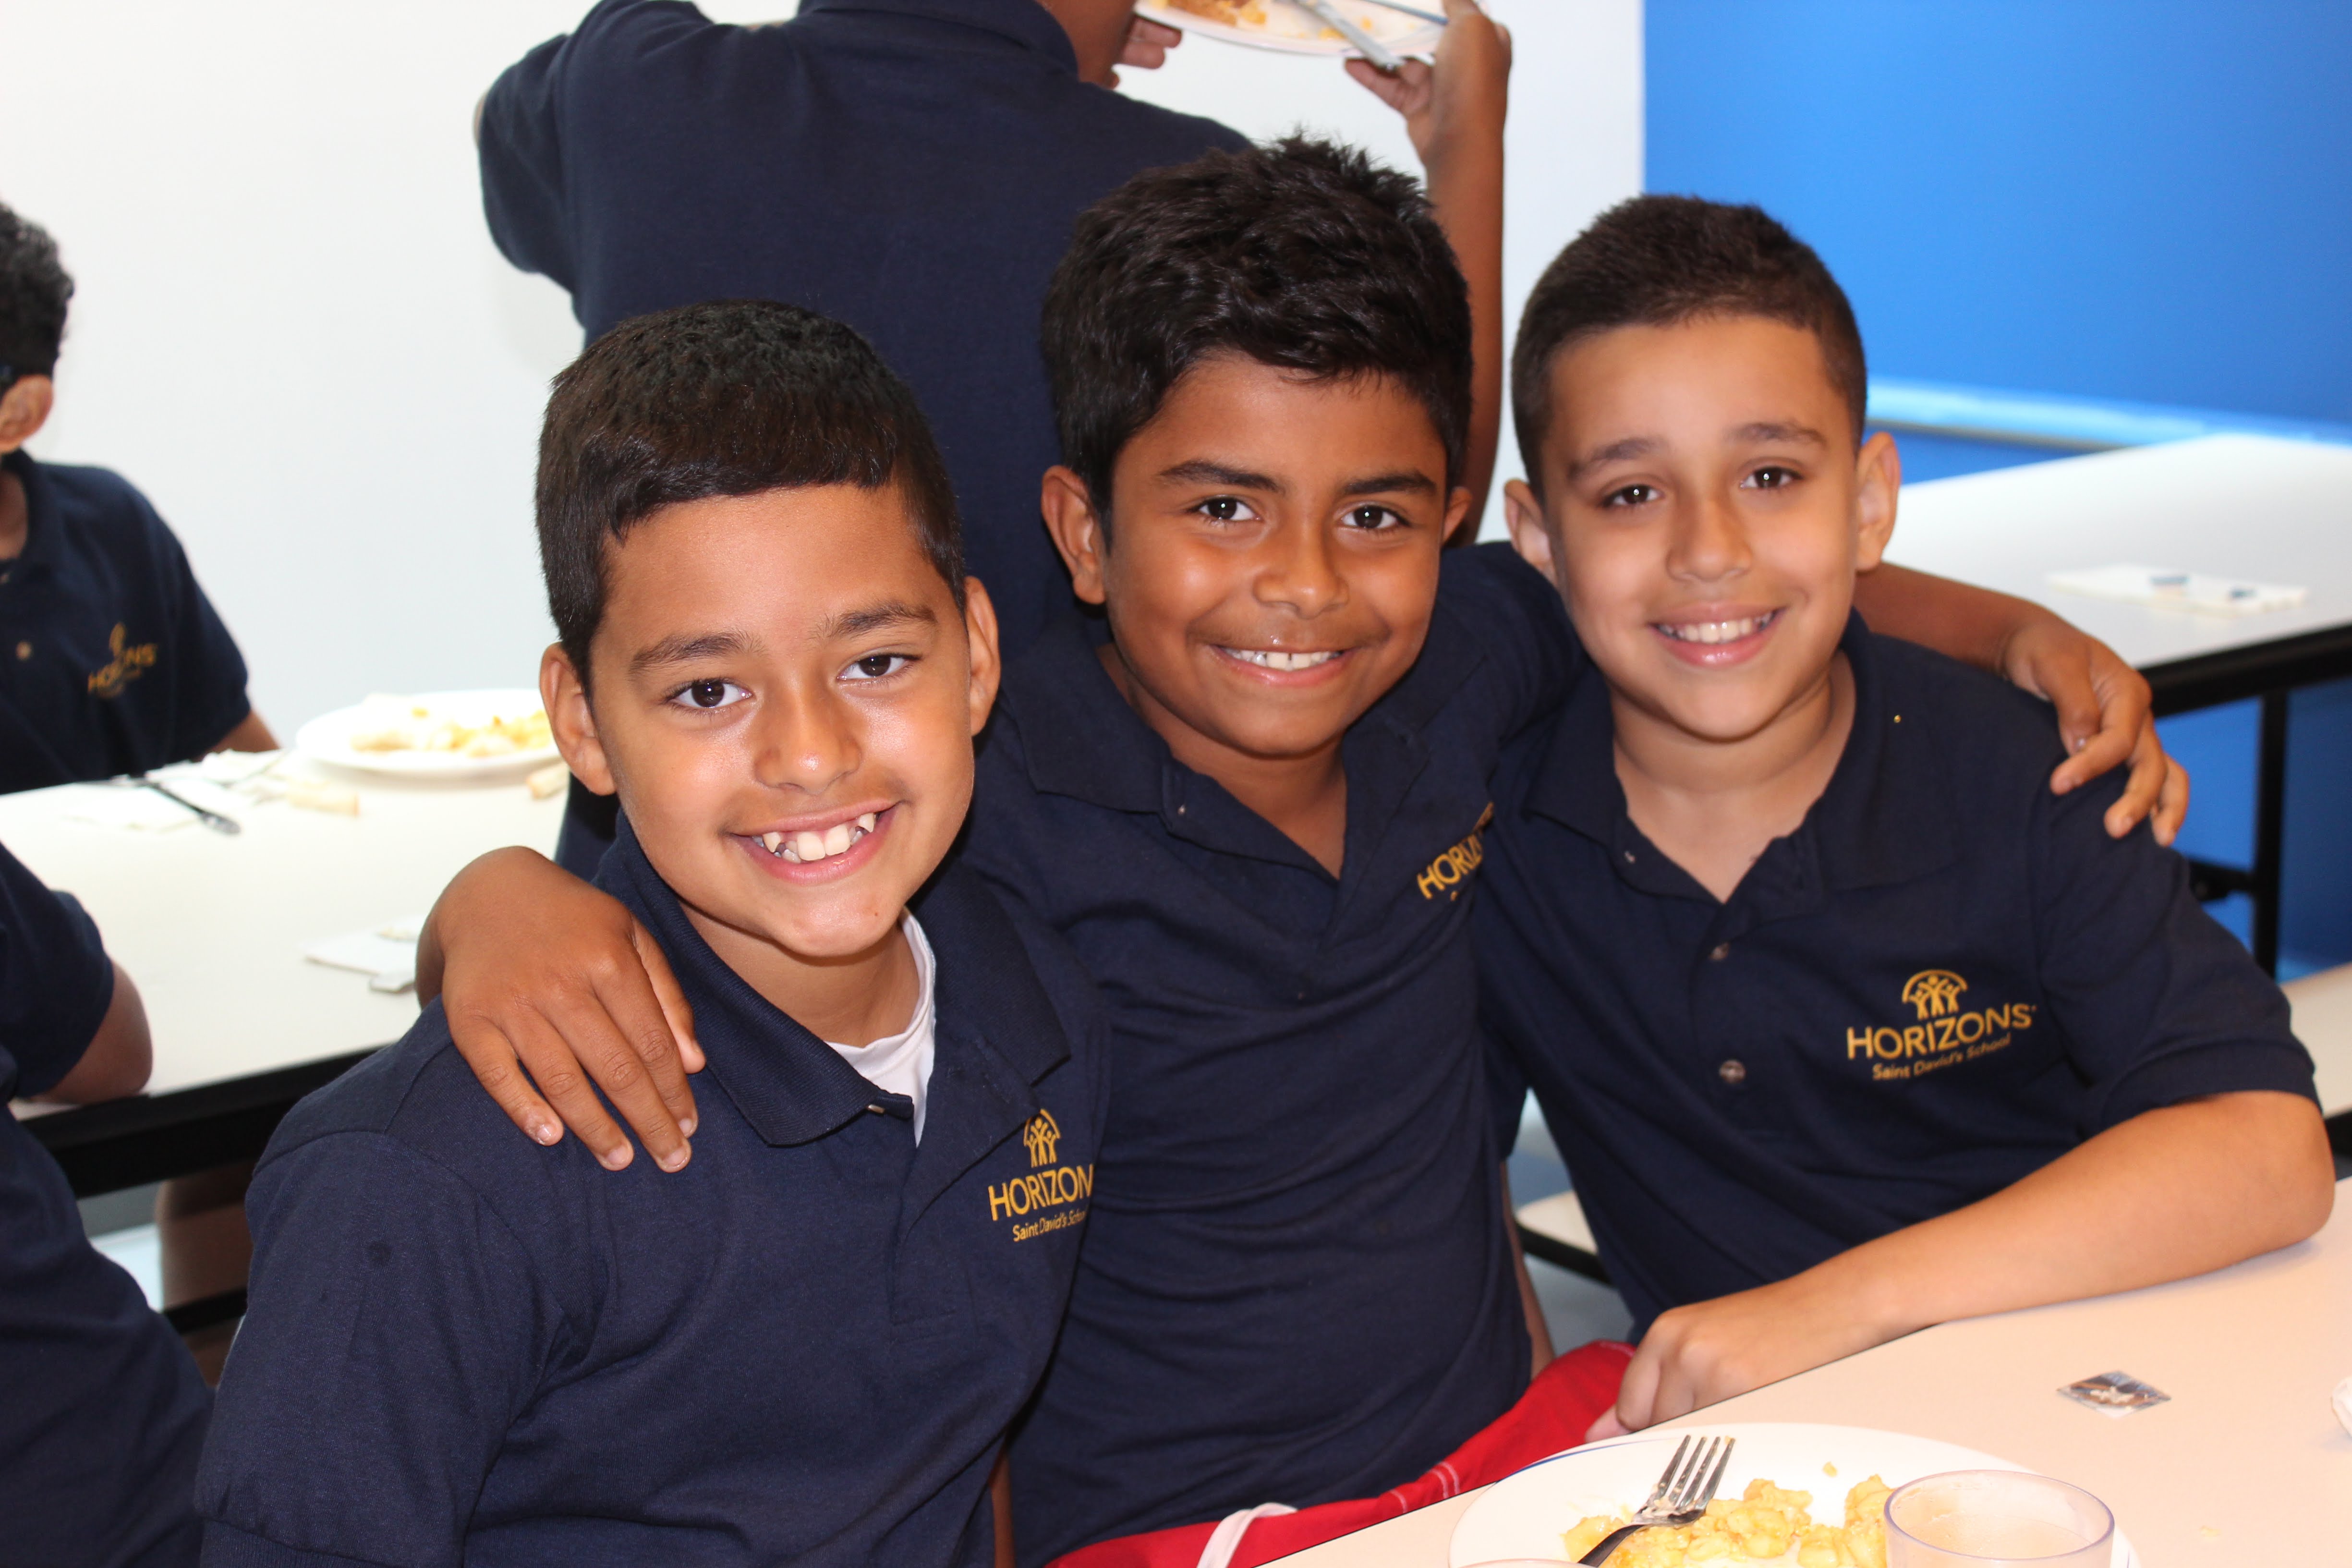 Three smiling boys wearing blue Horizons program shirts